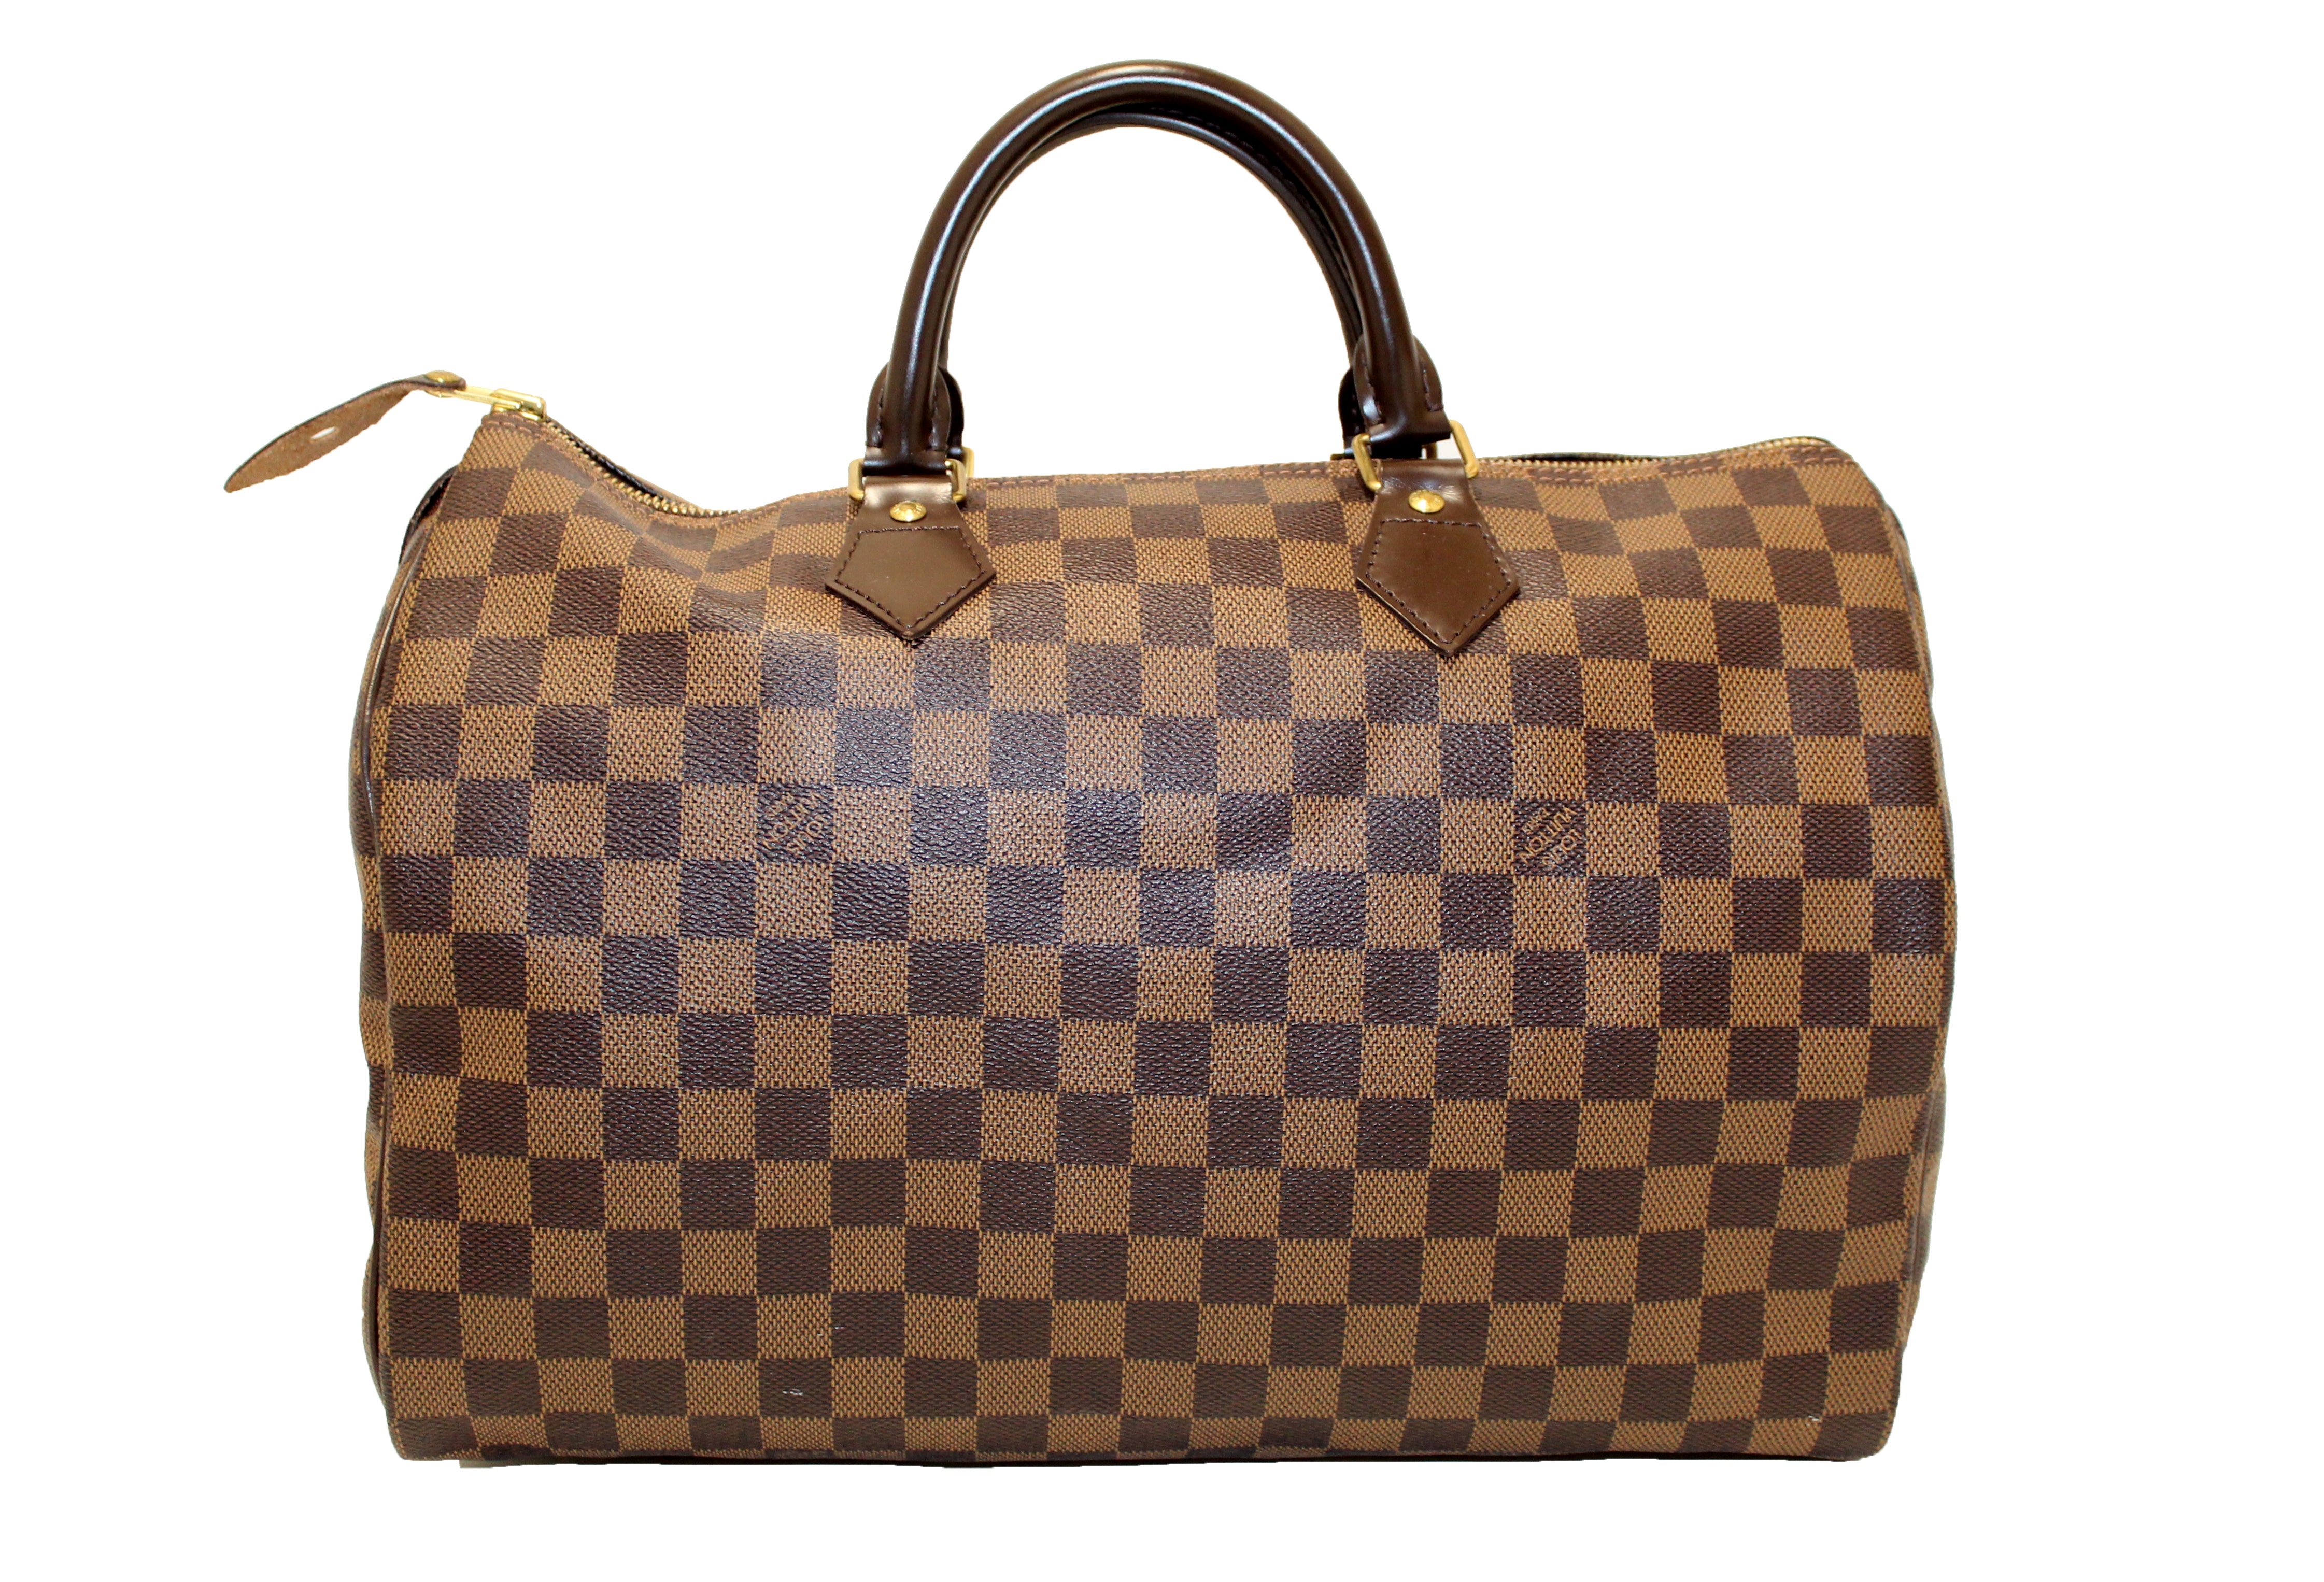 Authentic Louis Vuitton Damier Ebene Speedy 35 Handbag